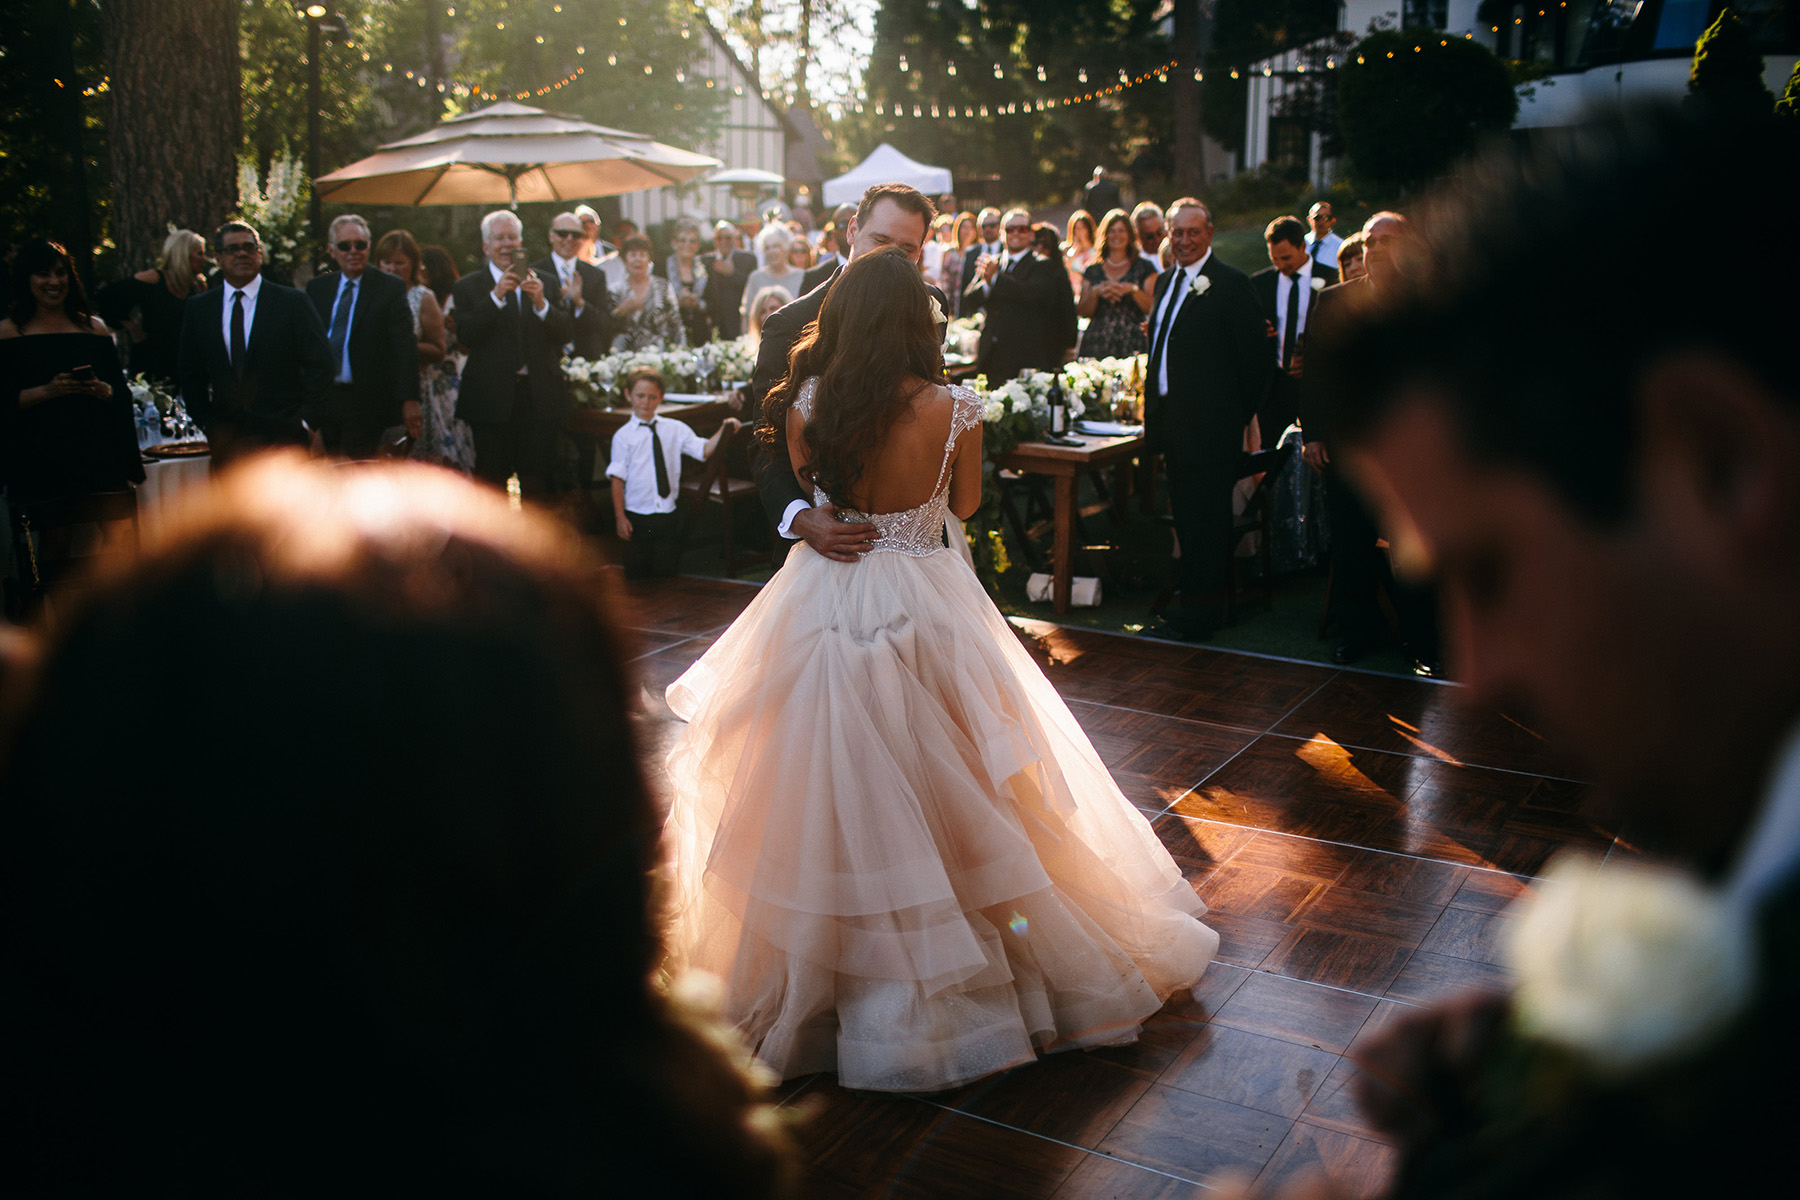 brett and tori photographers, outdoor wedding photos, favorite photos of the year